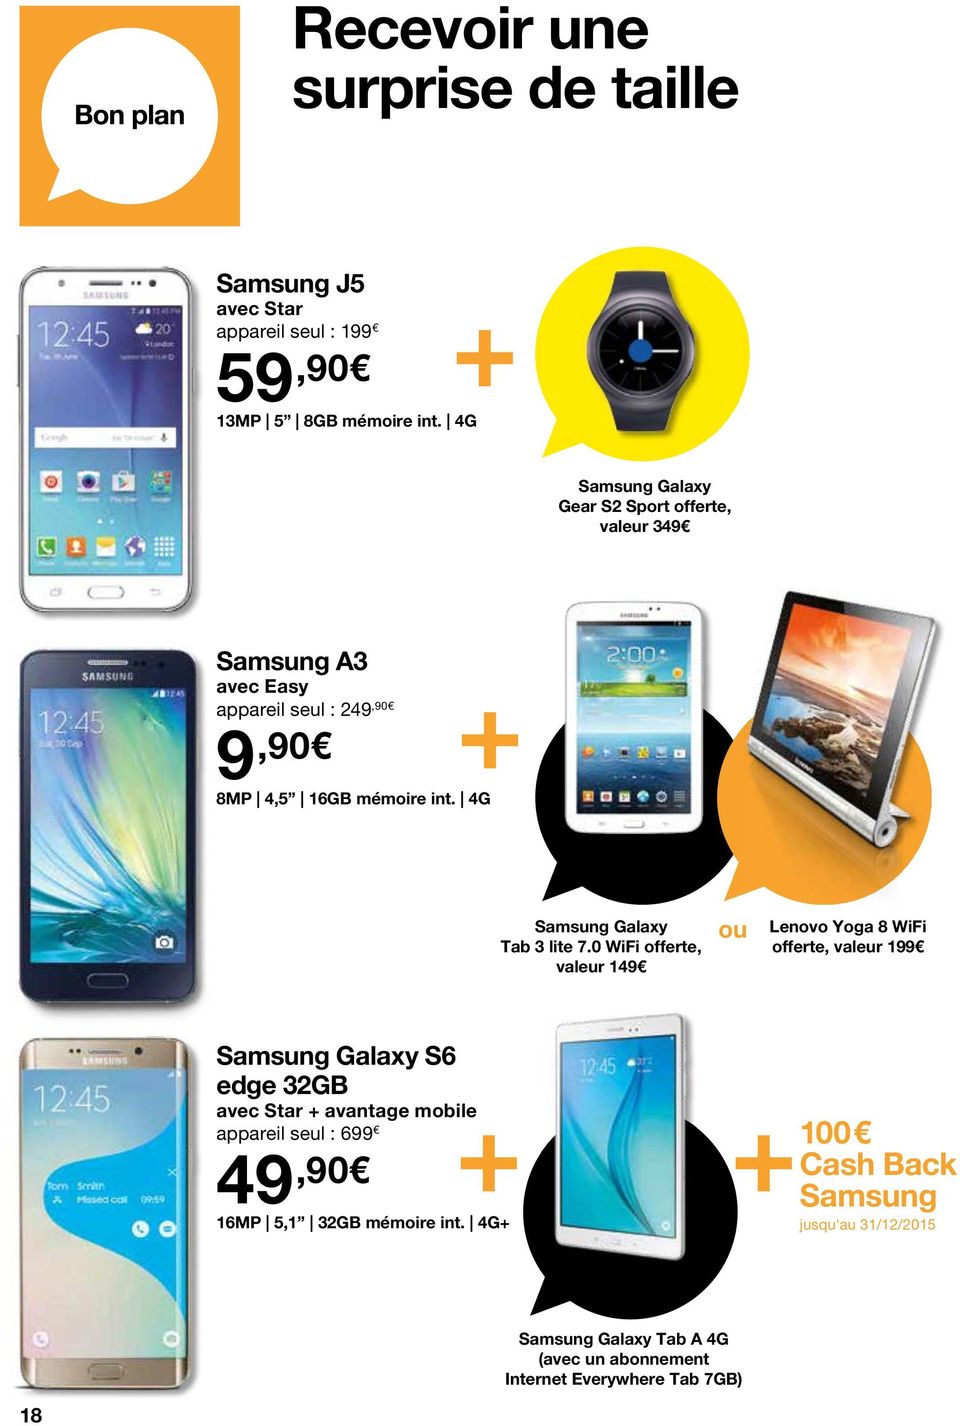 4G Samsung Galaxy Tab 3 lite 7.